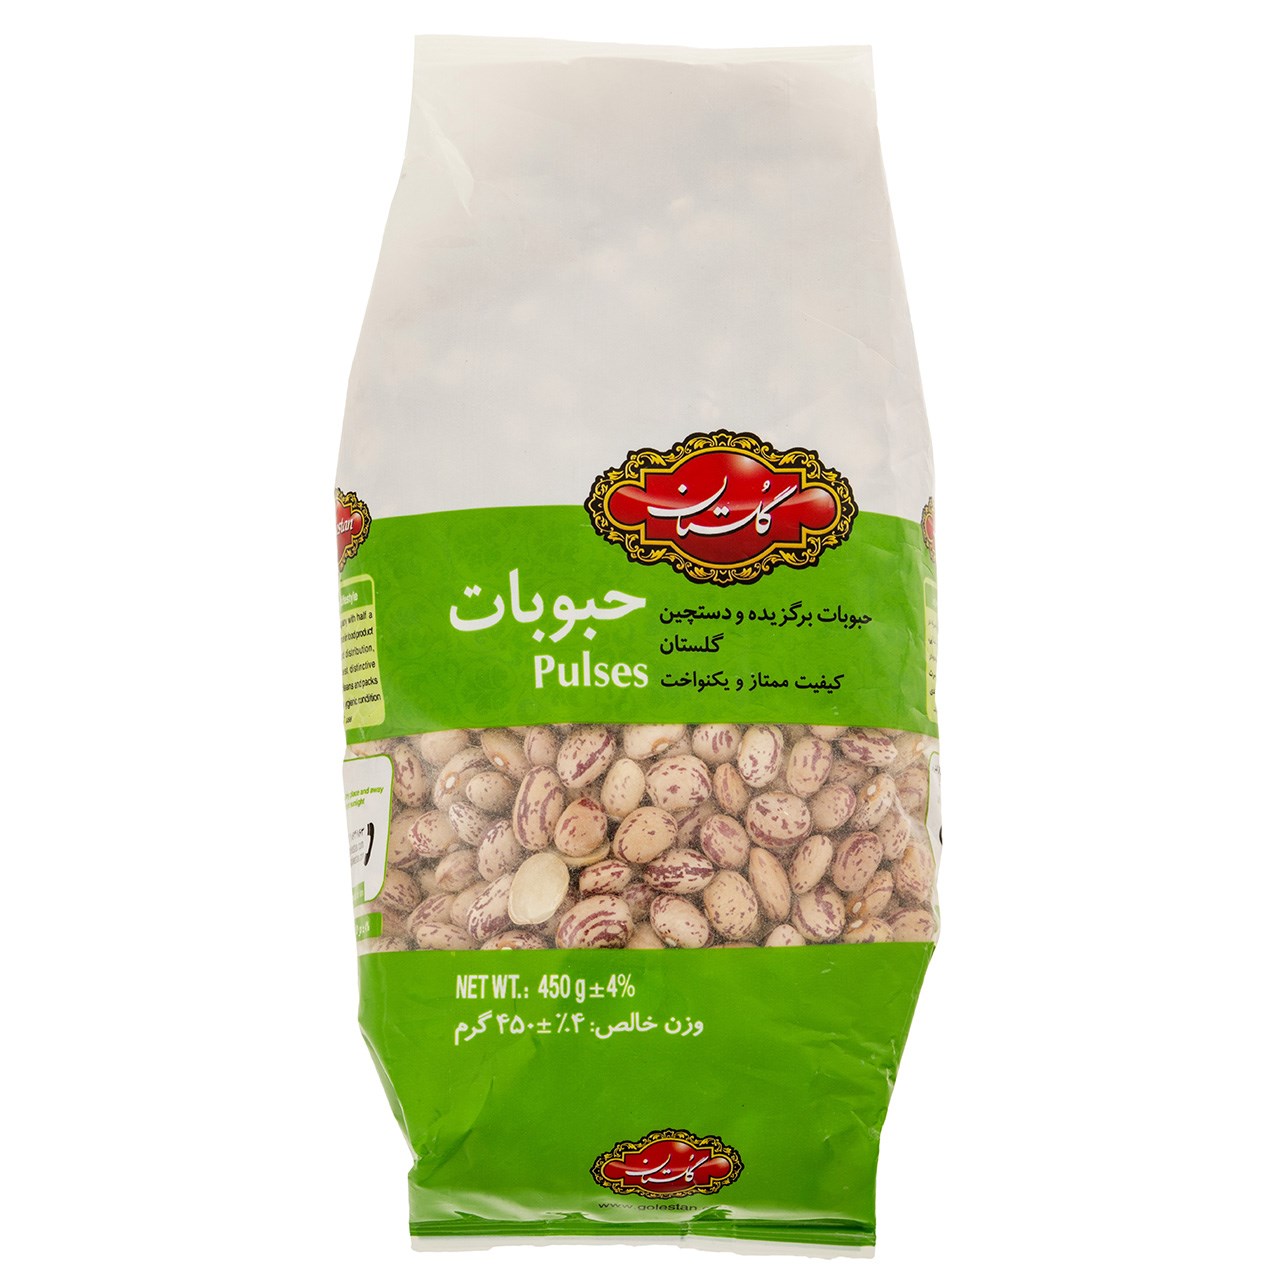 Golestan pinto beans, 150 grams